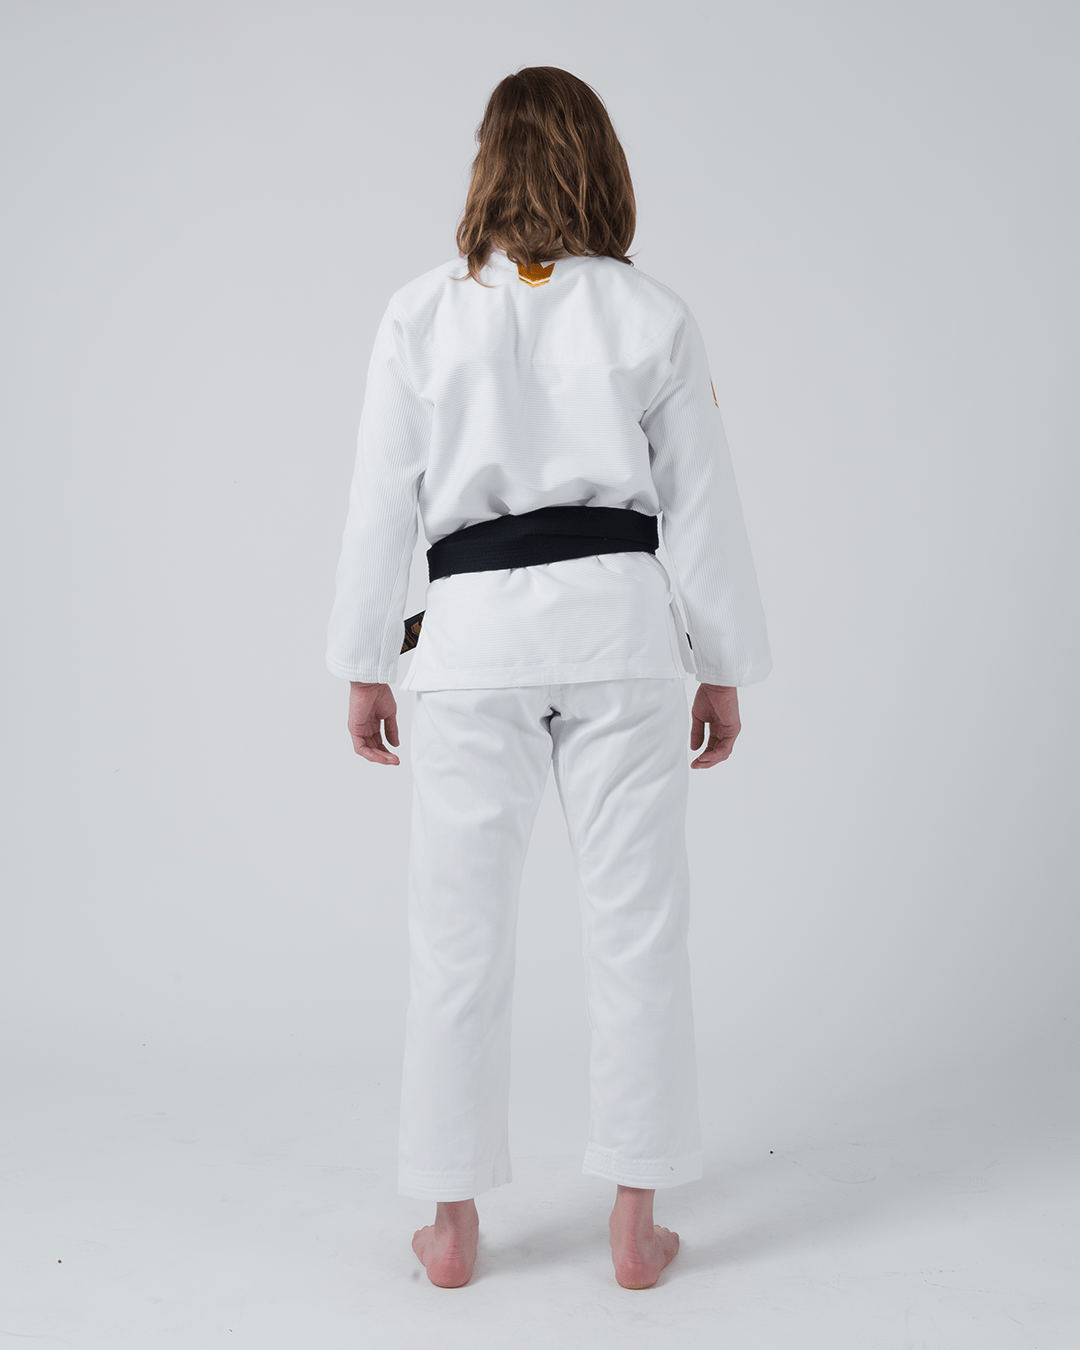 The ONE Jiu Jitsu Women's Gi - Black/Rose Gold - FREE White Belt –  KingzKimonos.com